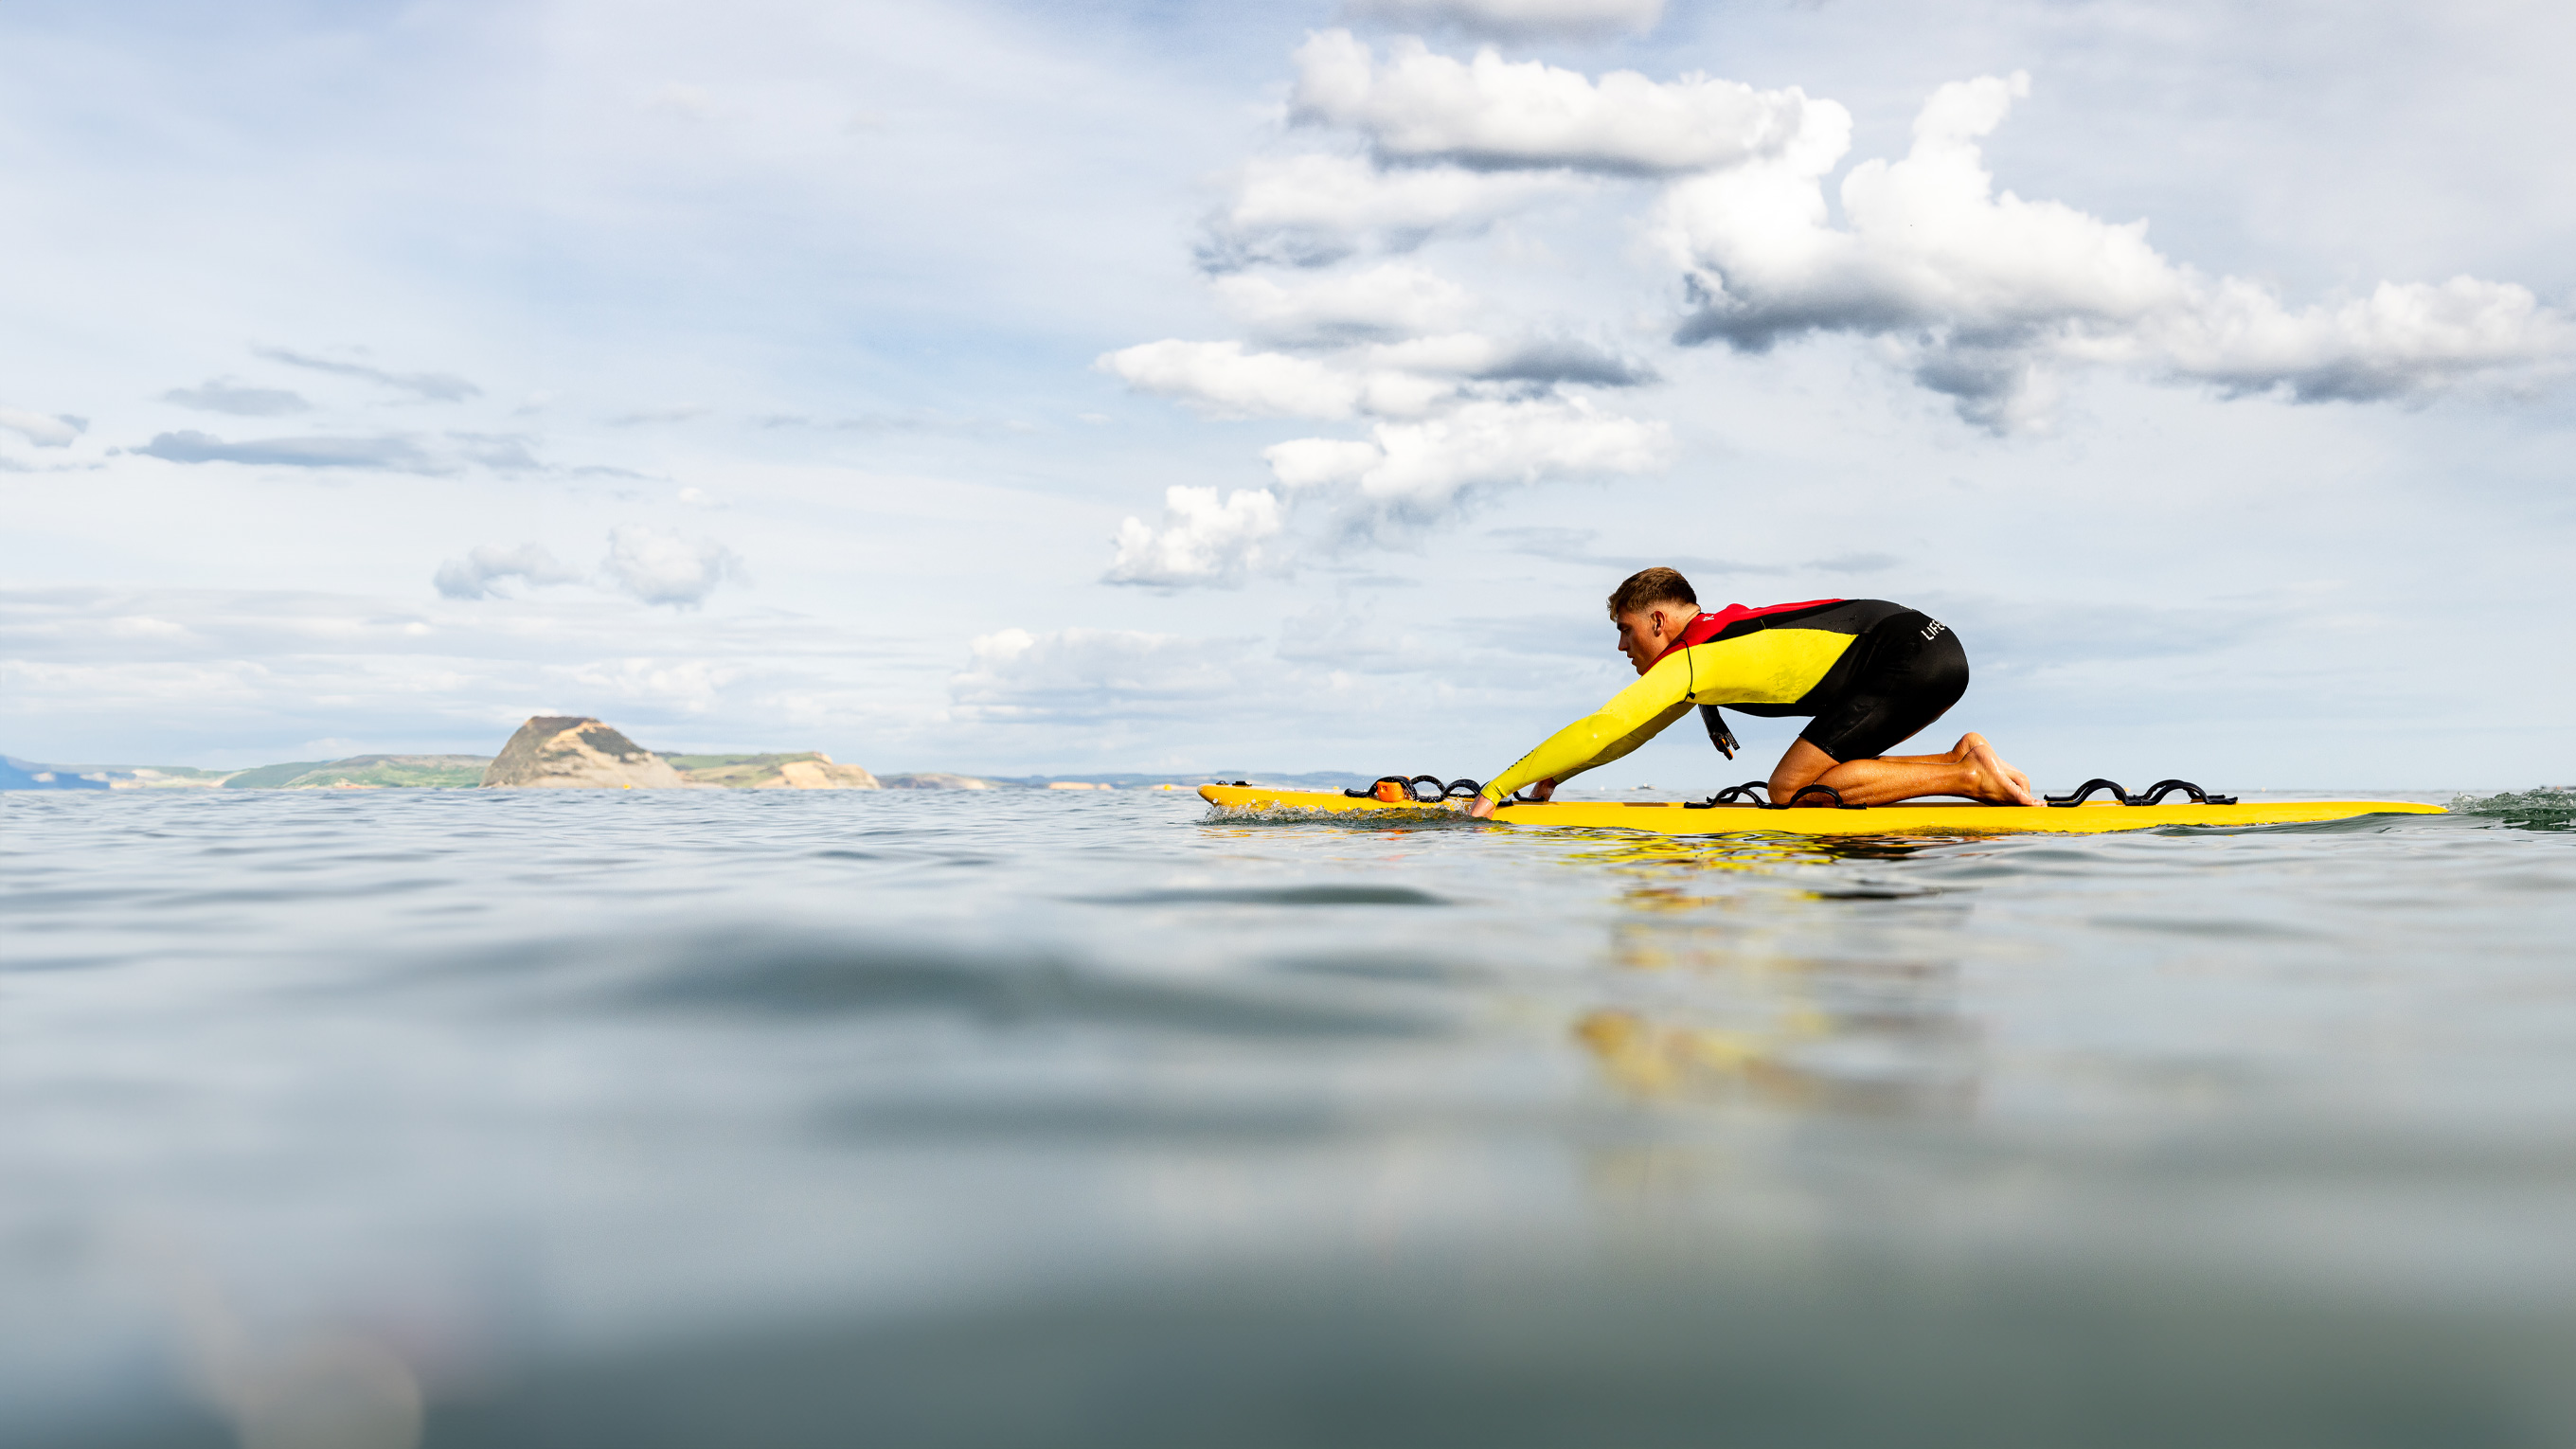 Ben Greenslade, West Dorset Lifeguard, patrolling Lyme Regis Beach using a rescue board.